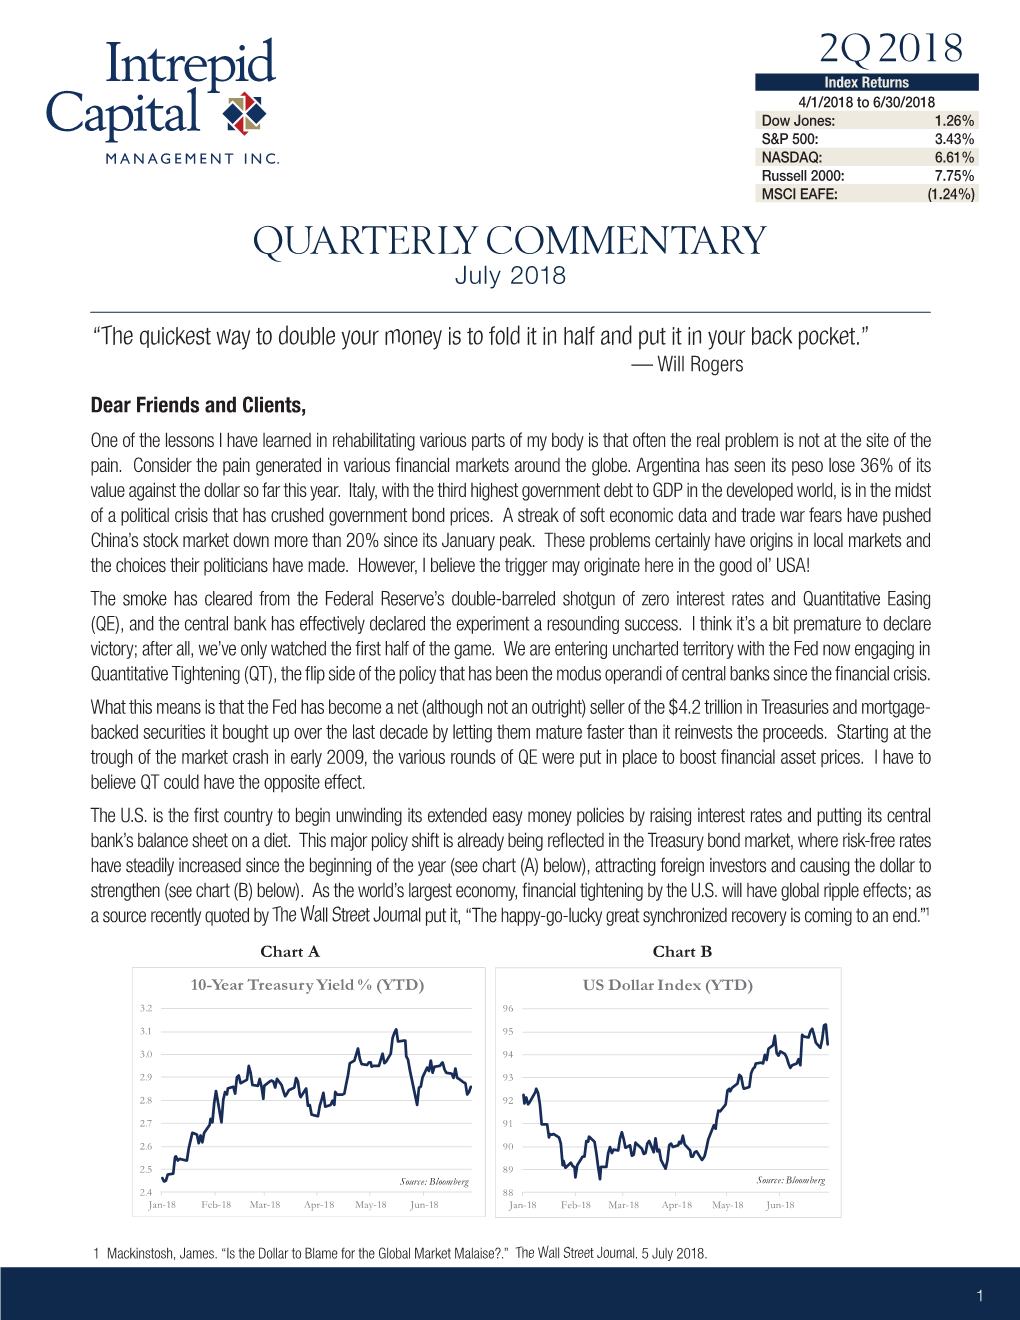 2Q 2018 Quarterly Commentary